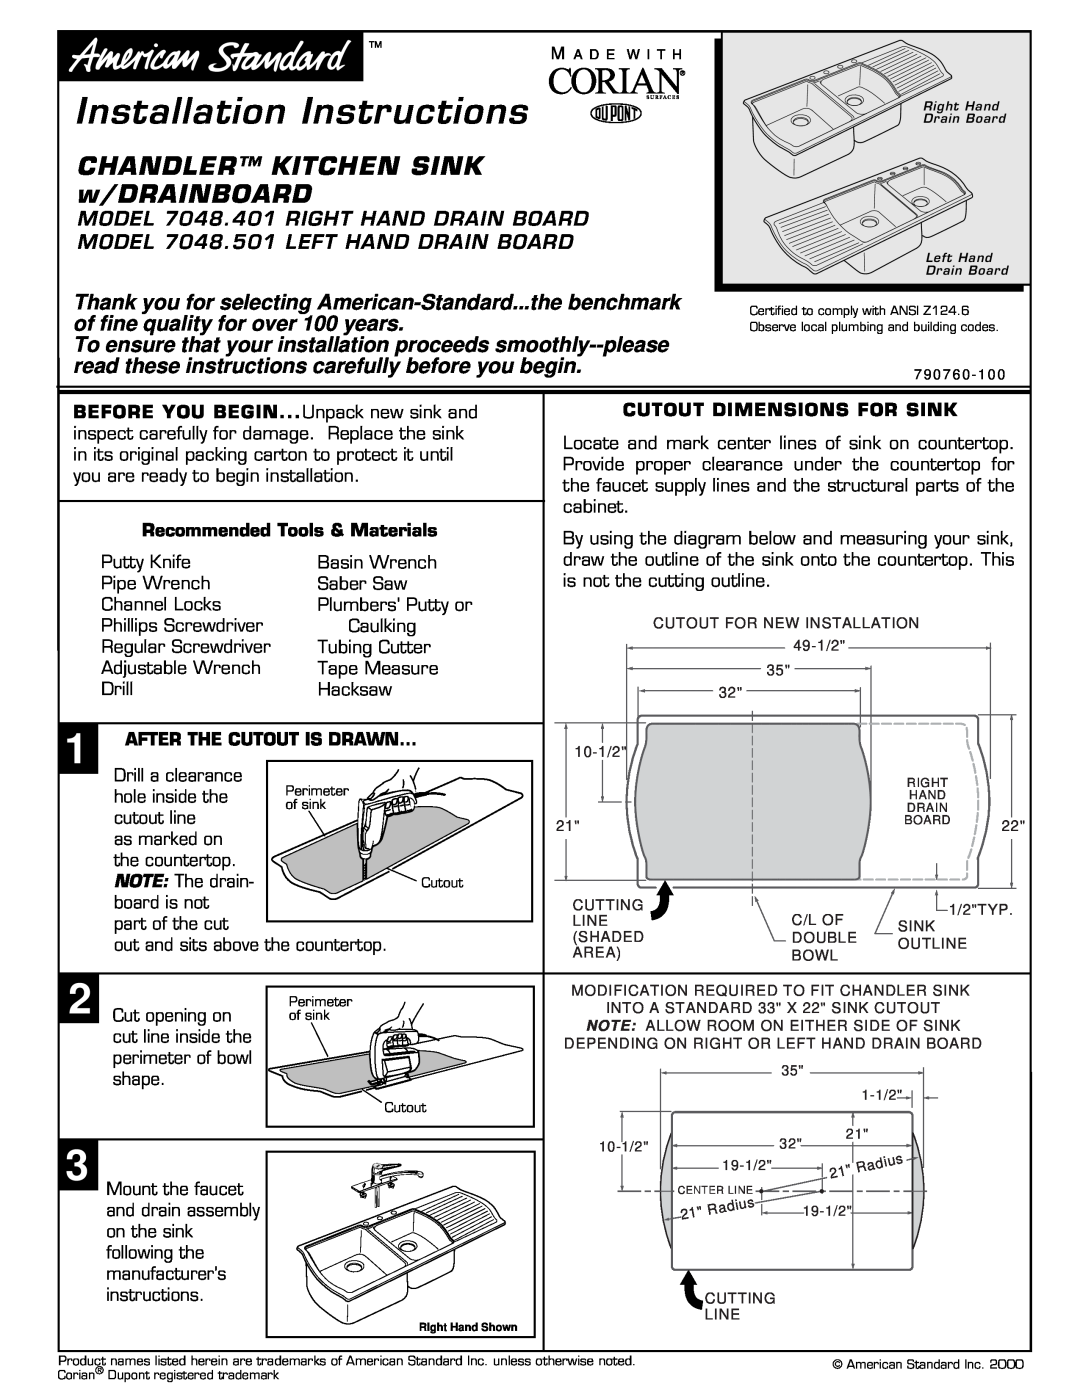 American Standard 7048.501 installation instructions Installation Instructions, CHANDLER KITCHEN SINK w/DRAINBOARD 